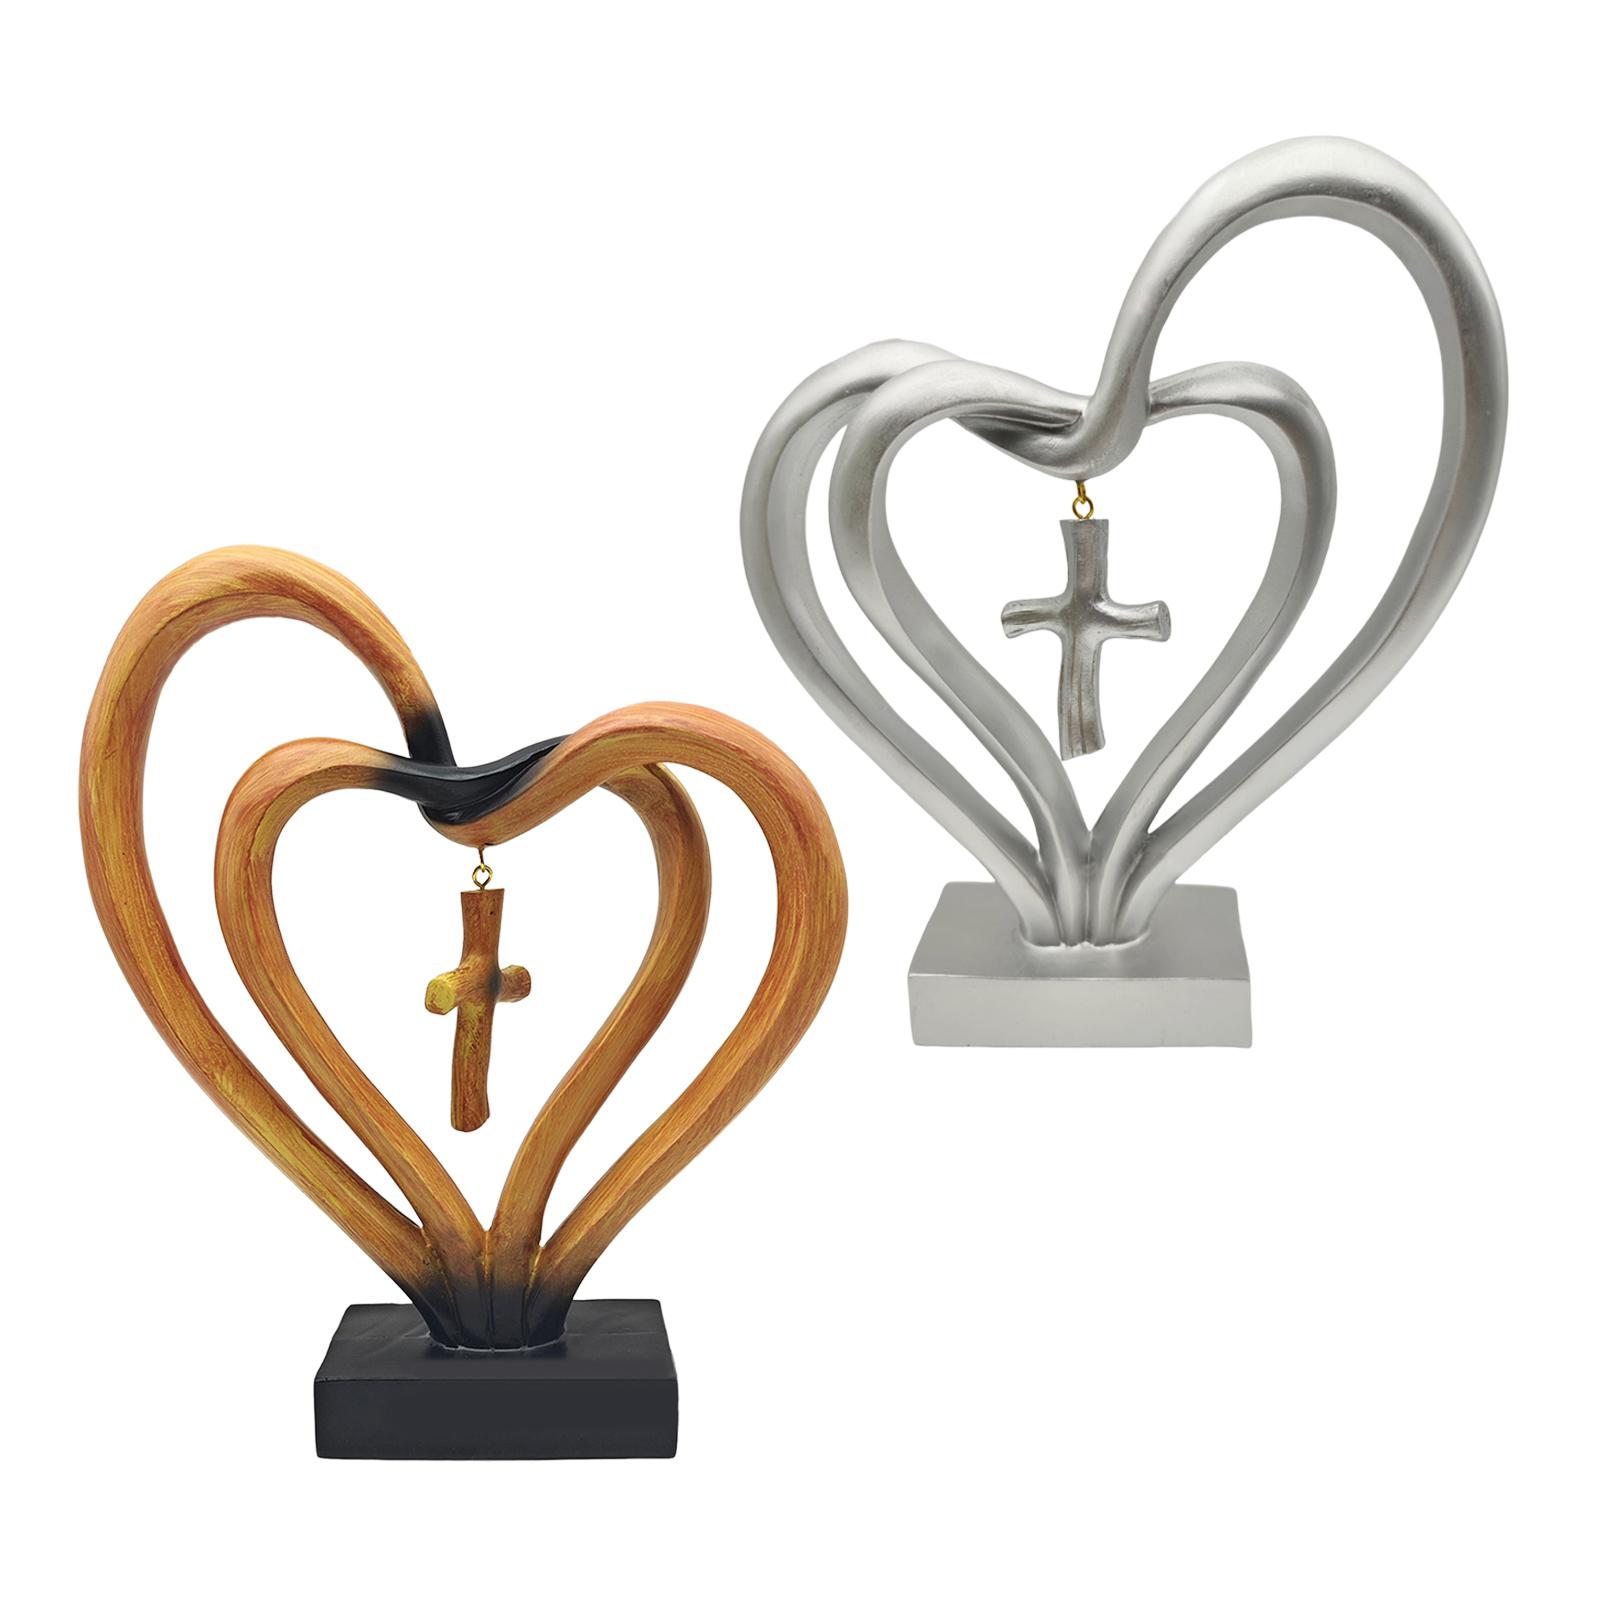 Resin Double Heart Statue Sculpture for Bookshelf or Office Desktop Artistic Brown